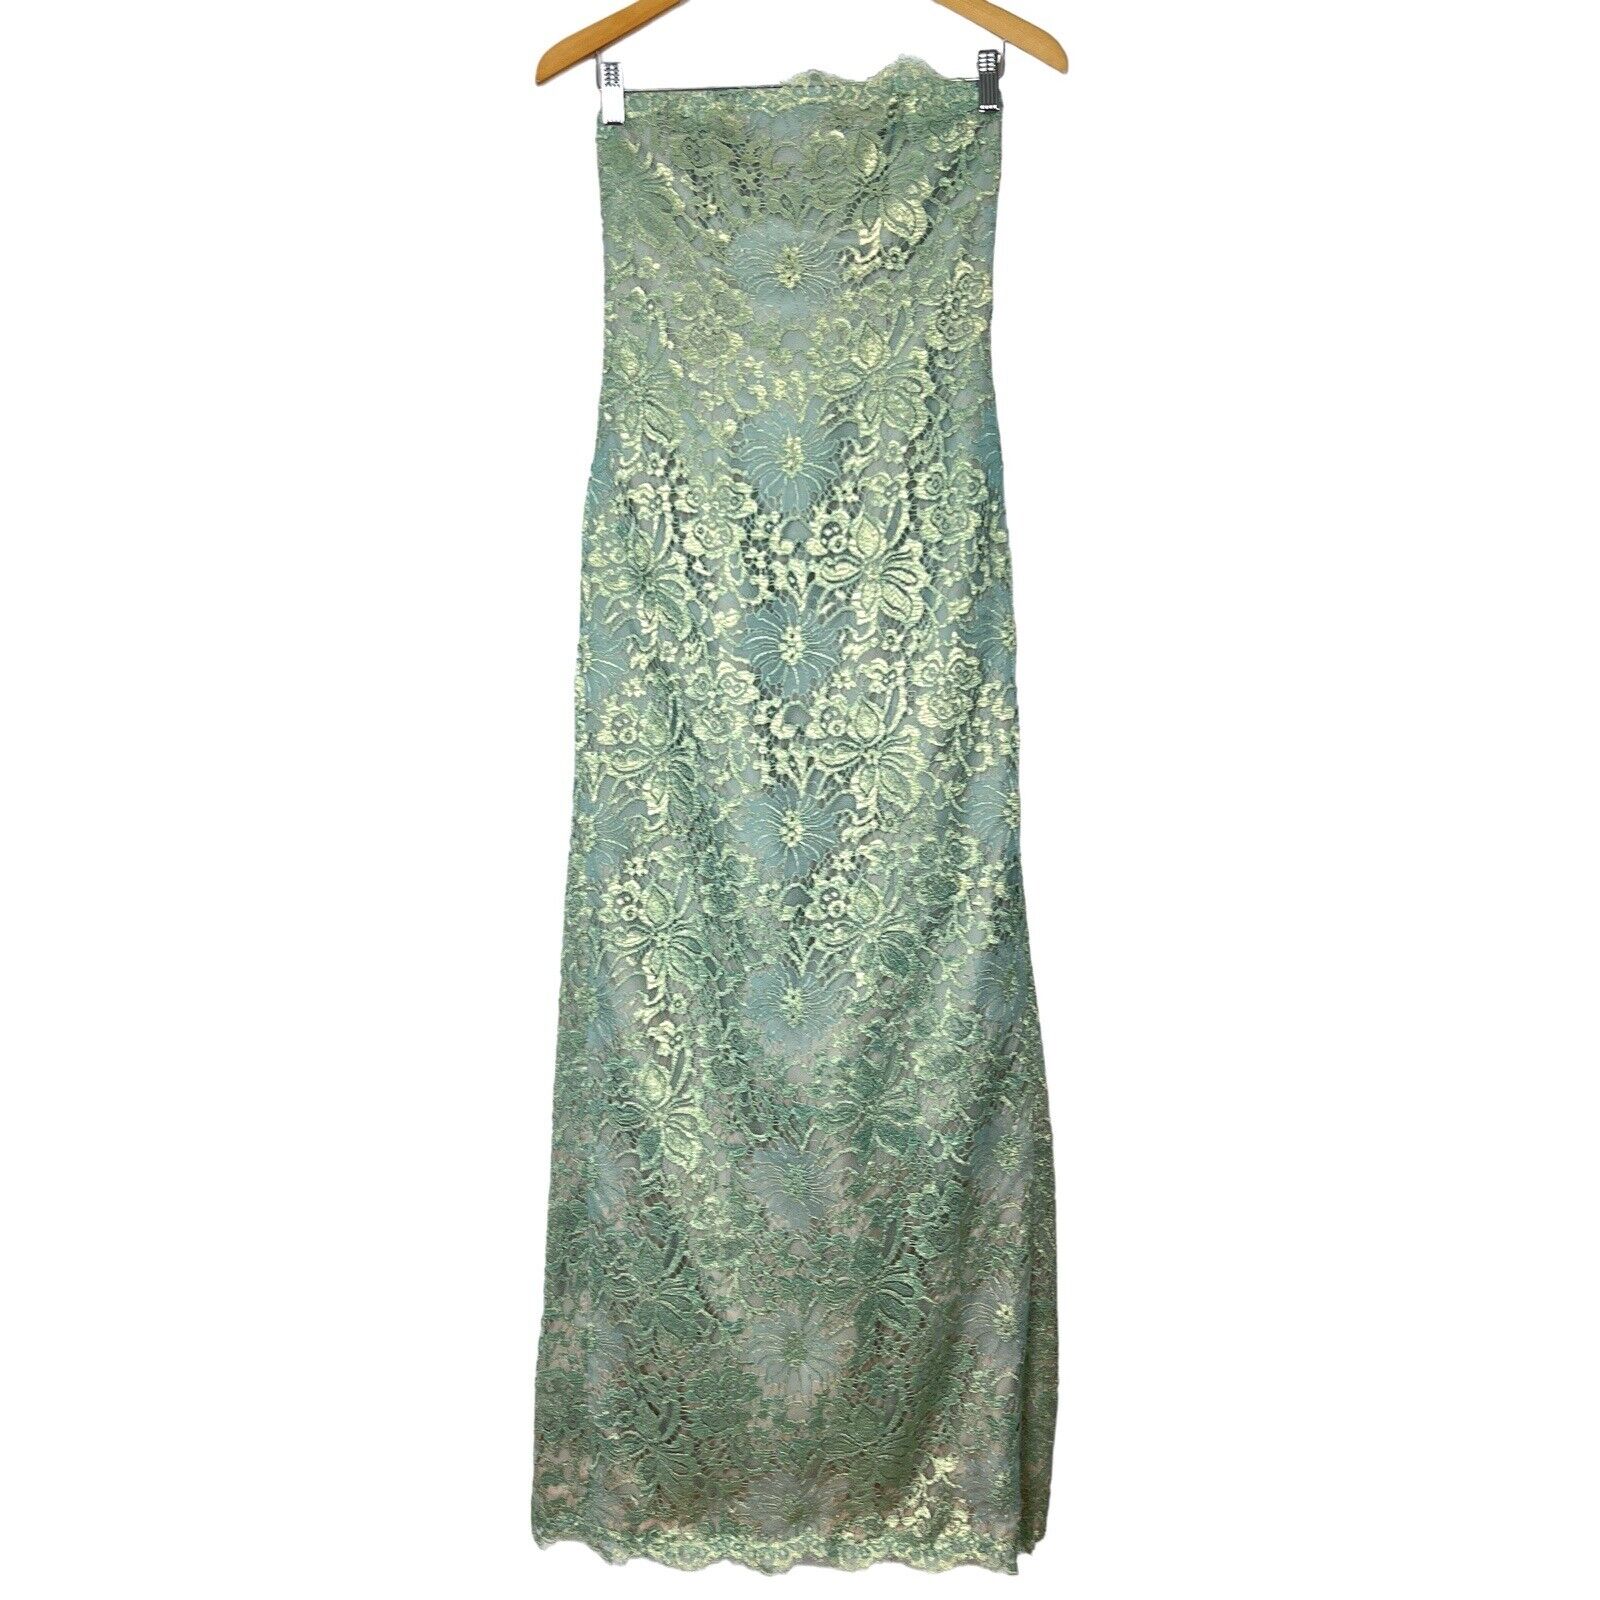 Chris Kole Vintage Formal Dress Womens 8 Lace Strapless Iridescent Green Prom